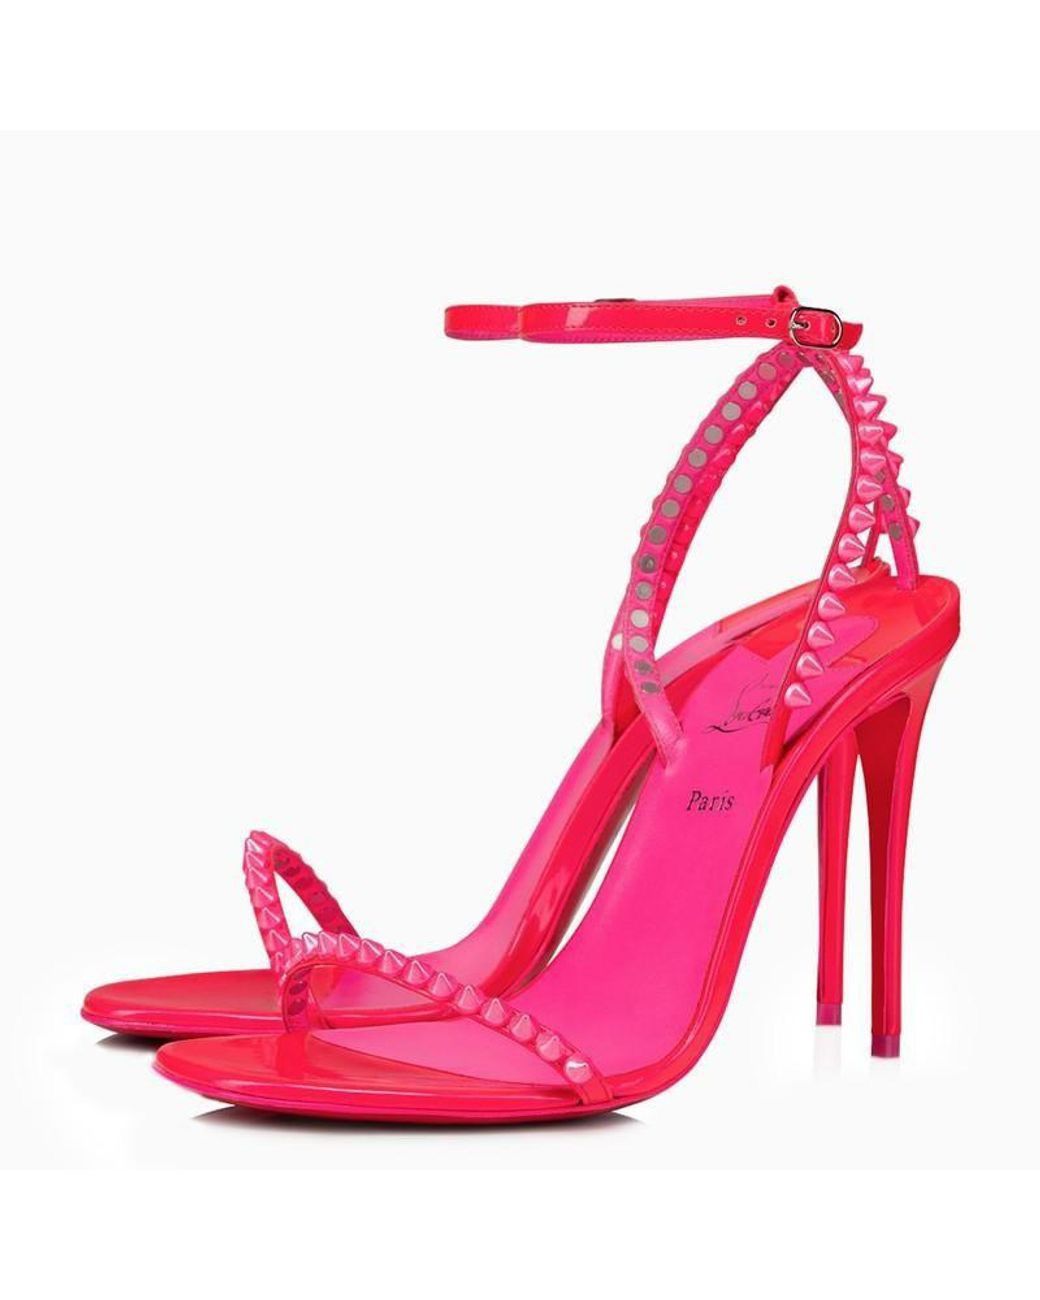 Christian Louboutin So Me 100 Patent Sandal in Pink – Stanley Korshak